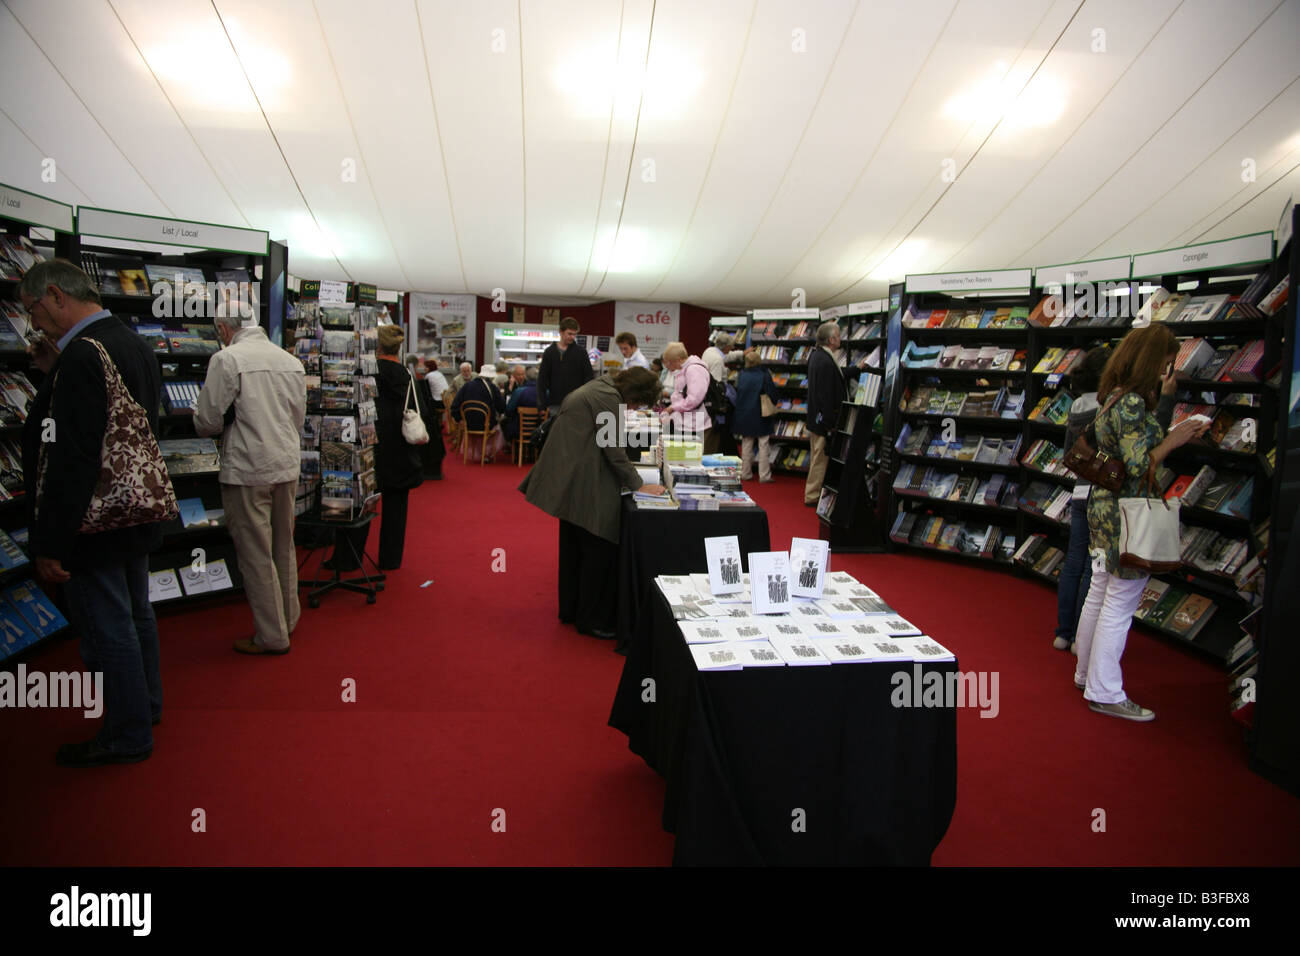 Bookshop & cafe at Edinburgh International Book Festival Stock Photo